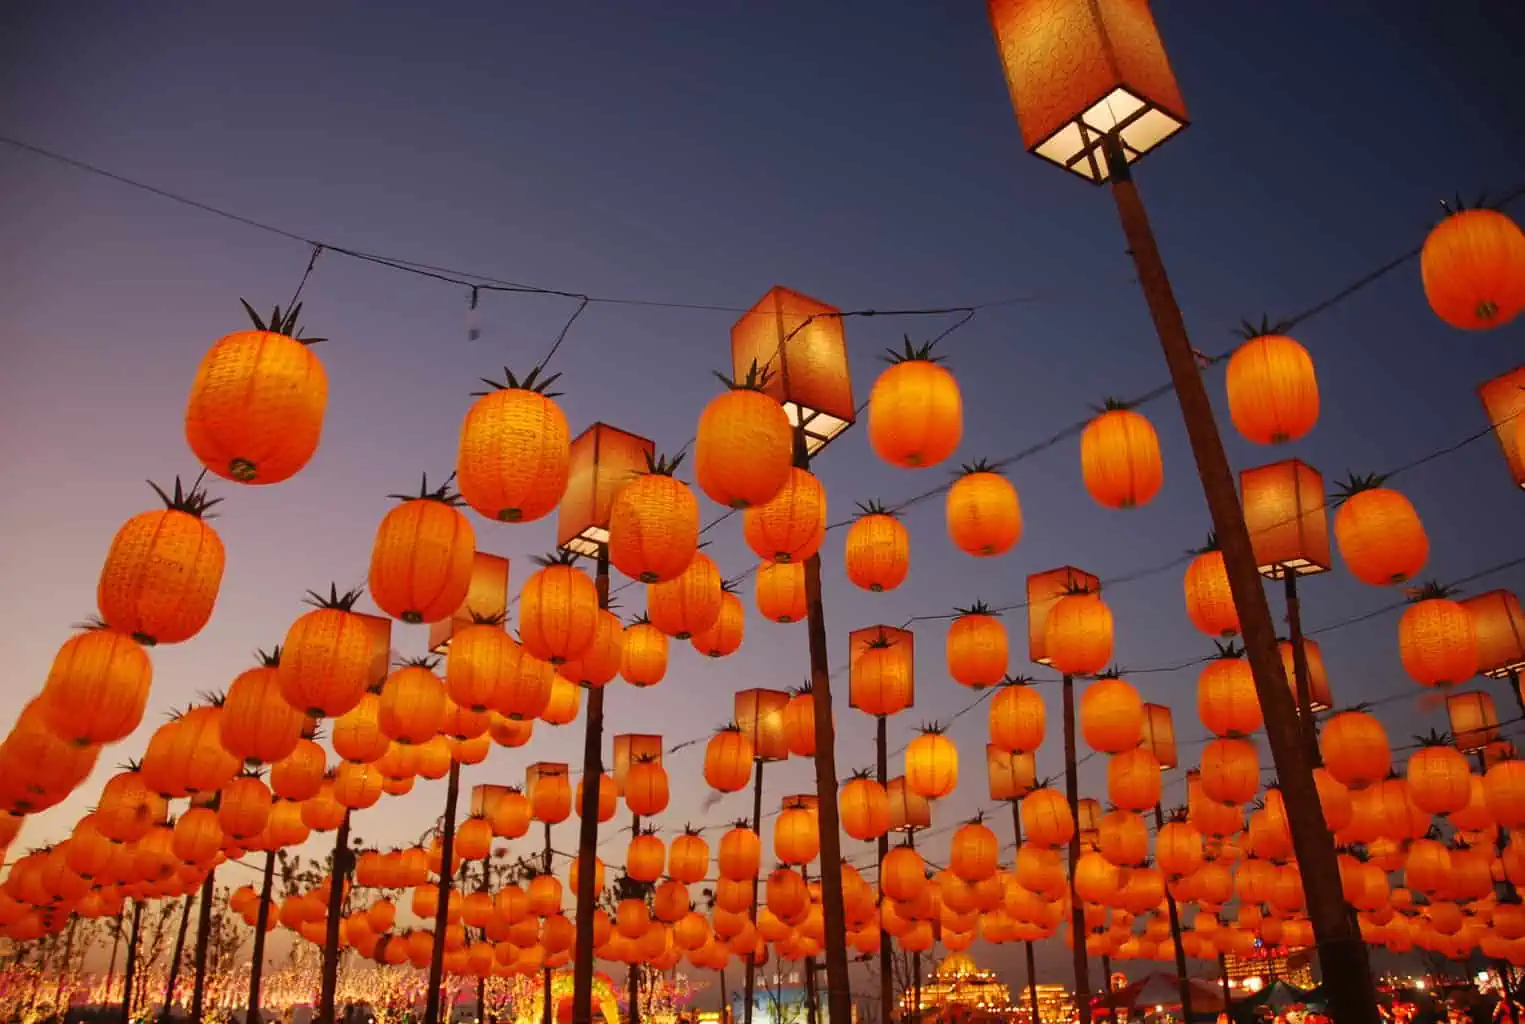 The Lantern Festival in Taiwan